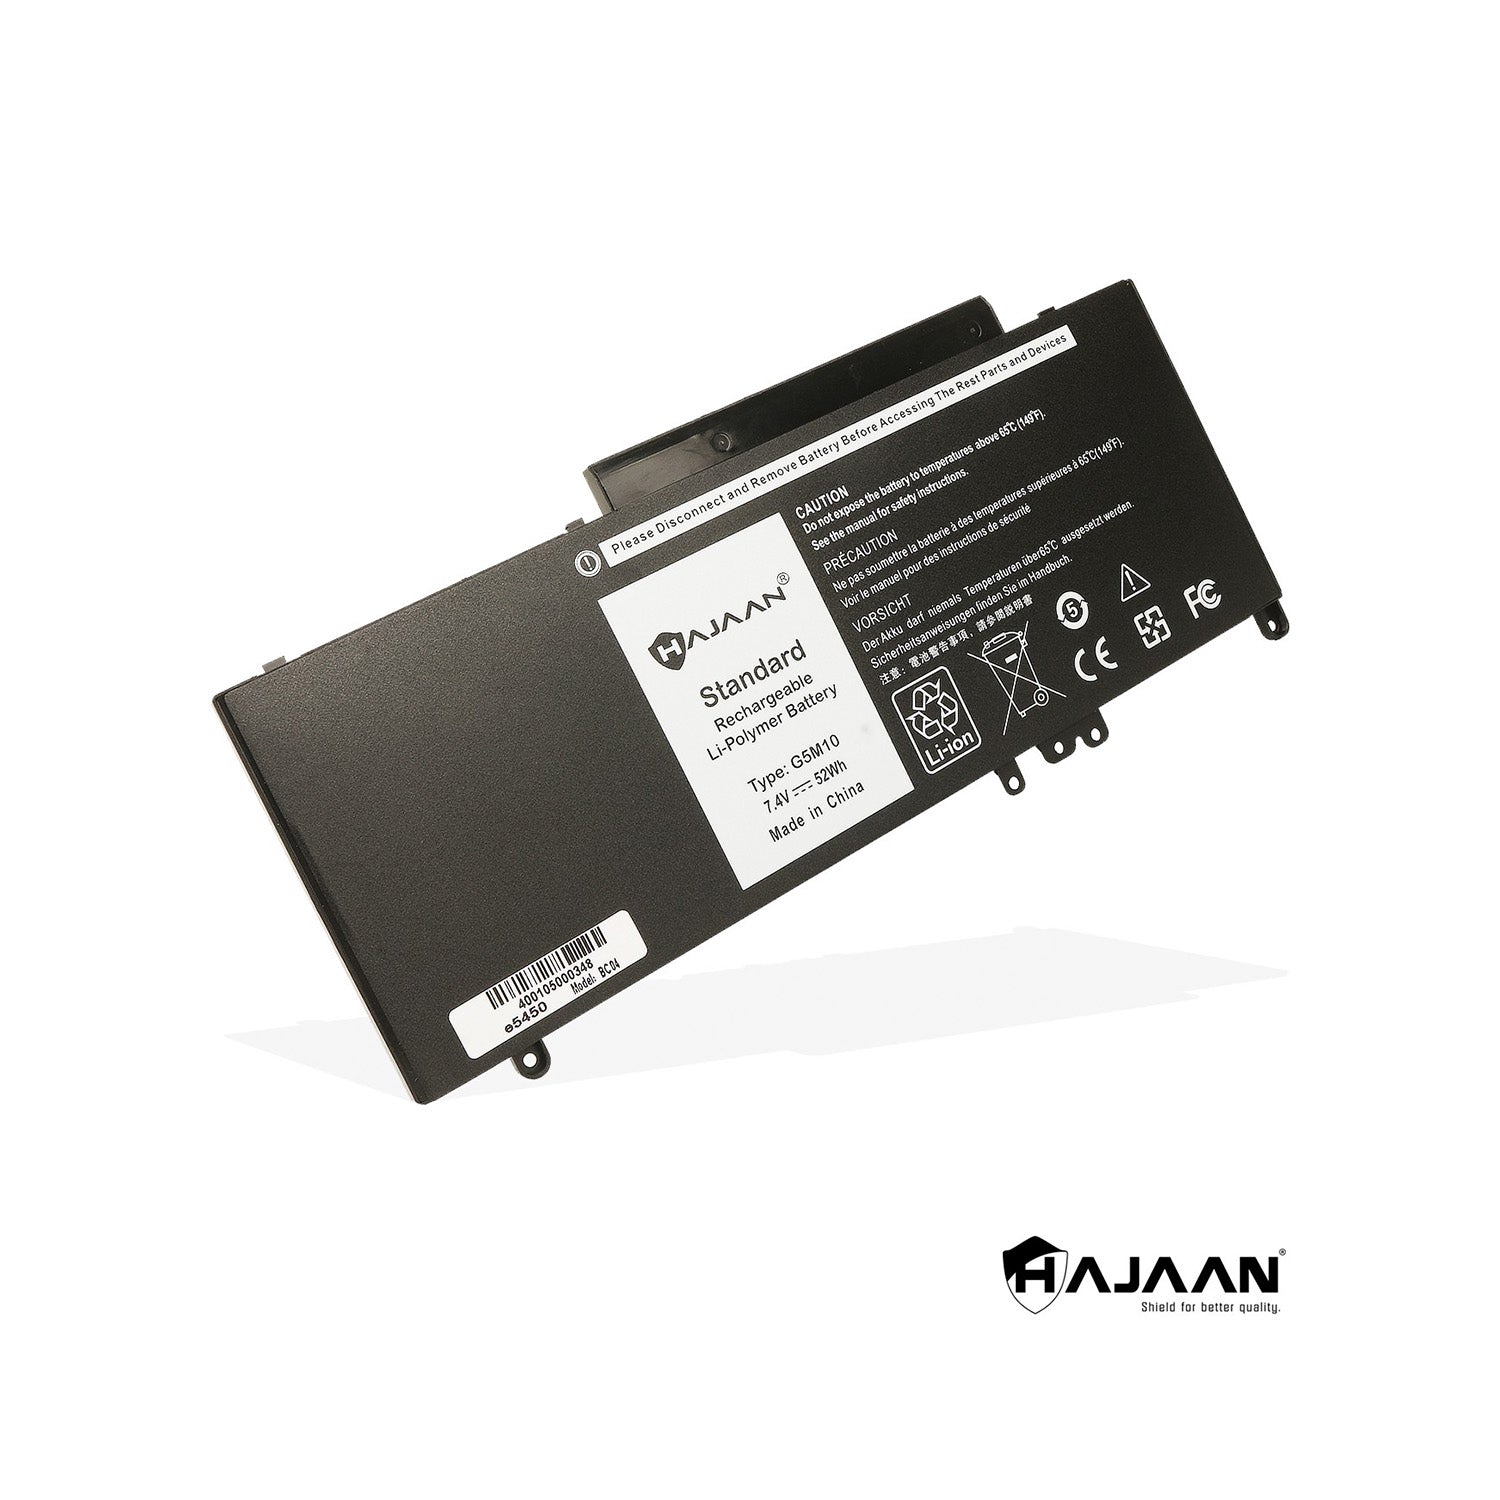 HAJAAN New Dell Lattitude E5450 E5550 8V5GX R9XM9 WYJC2 1KY05 G5M10 – High Performance (Li-polymer, 7000mAh / 52Wh,4-Cells,7.4V) Laptop Battery, 1 Year Warranty